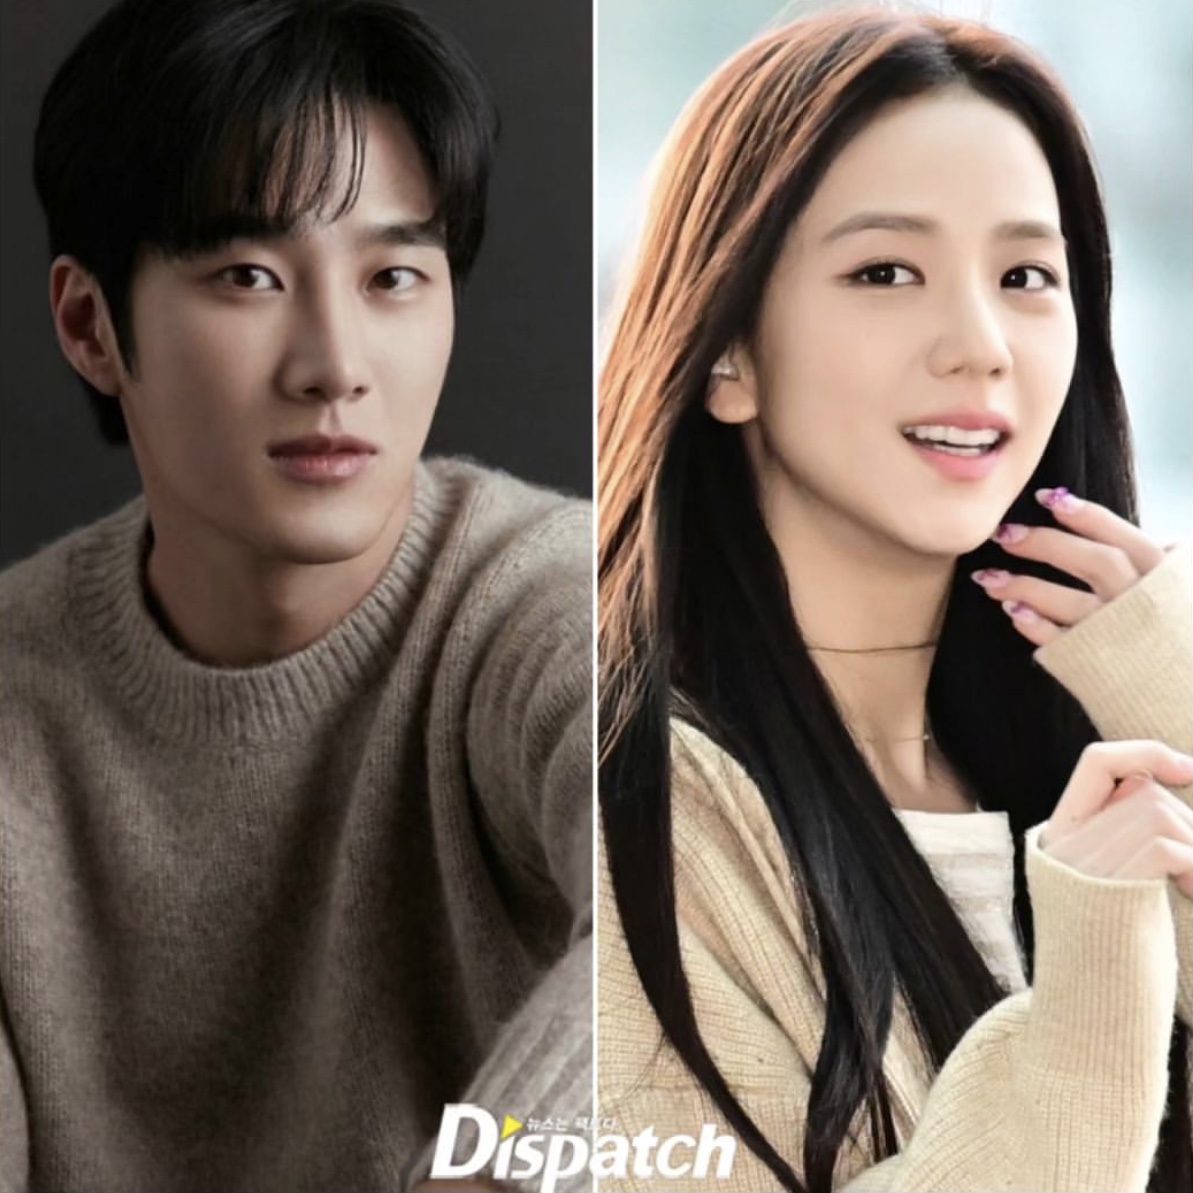 Kedua Agensi Mengonfirmasi Jisoo Blackpink dan Ahn Bo-hyun Berpacaran